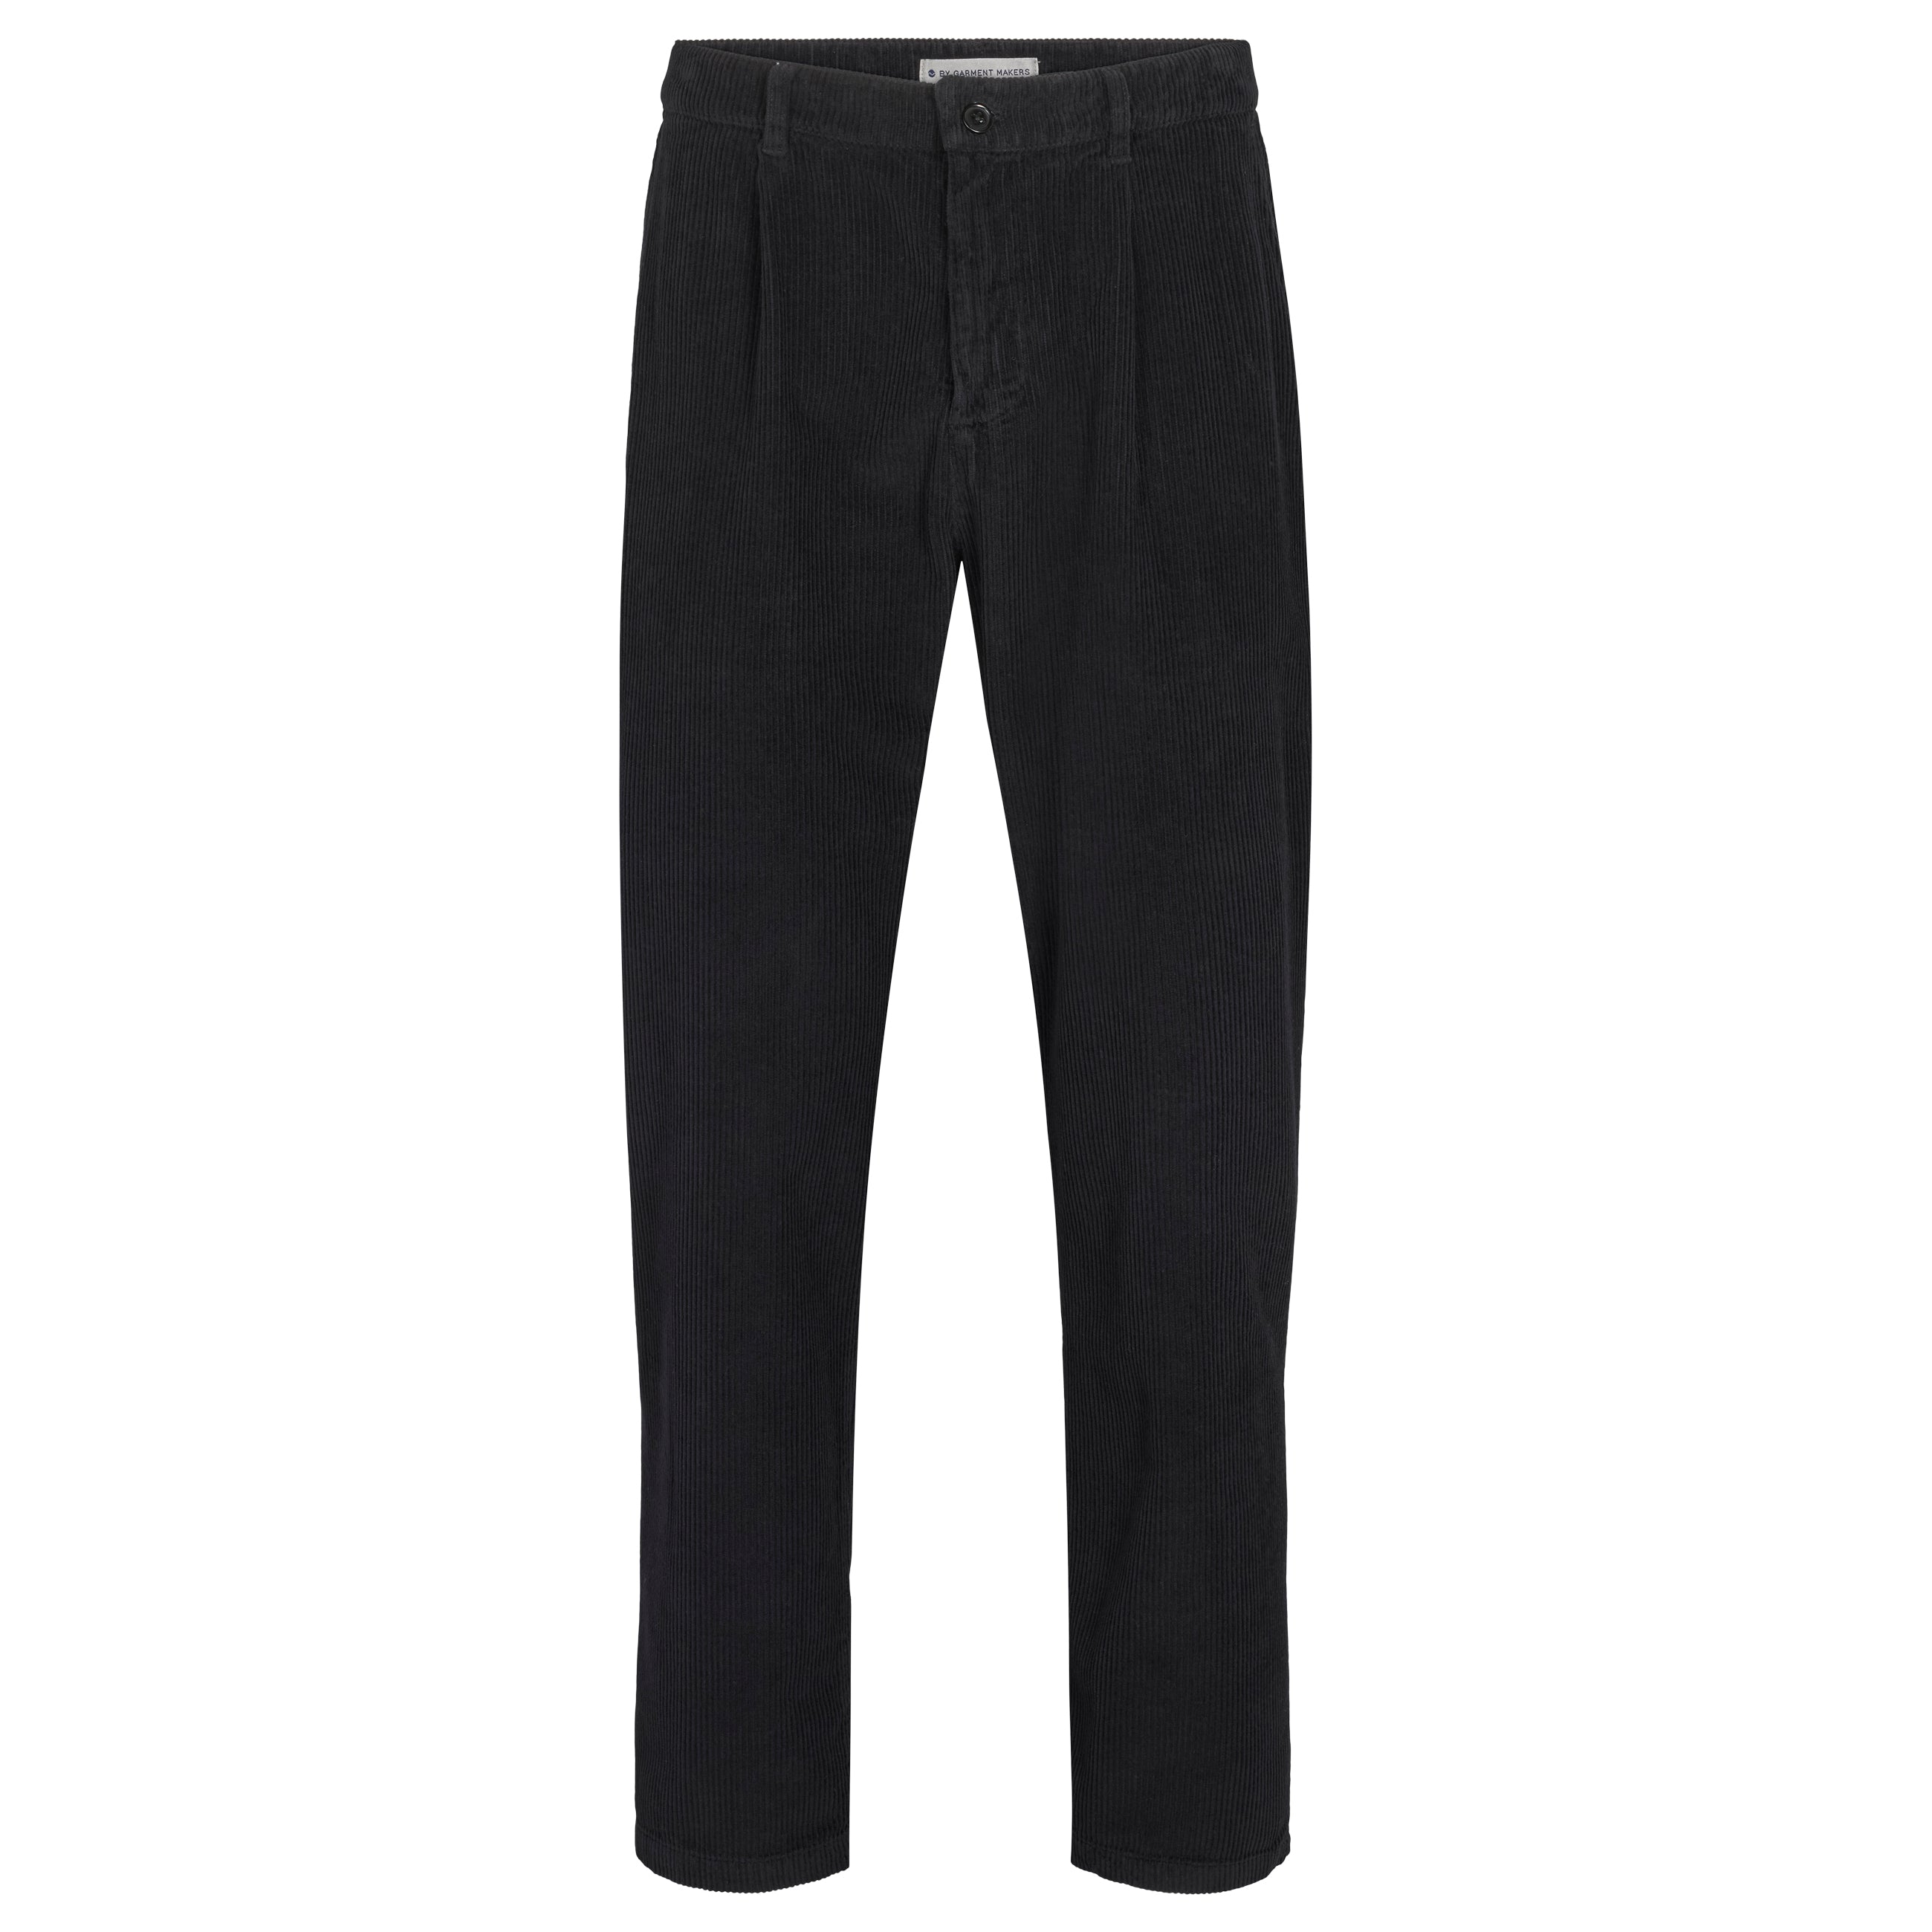 By Garment Makers Buster Corduroy Pants GOTS Pants 1204 Jet Black